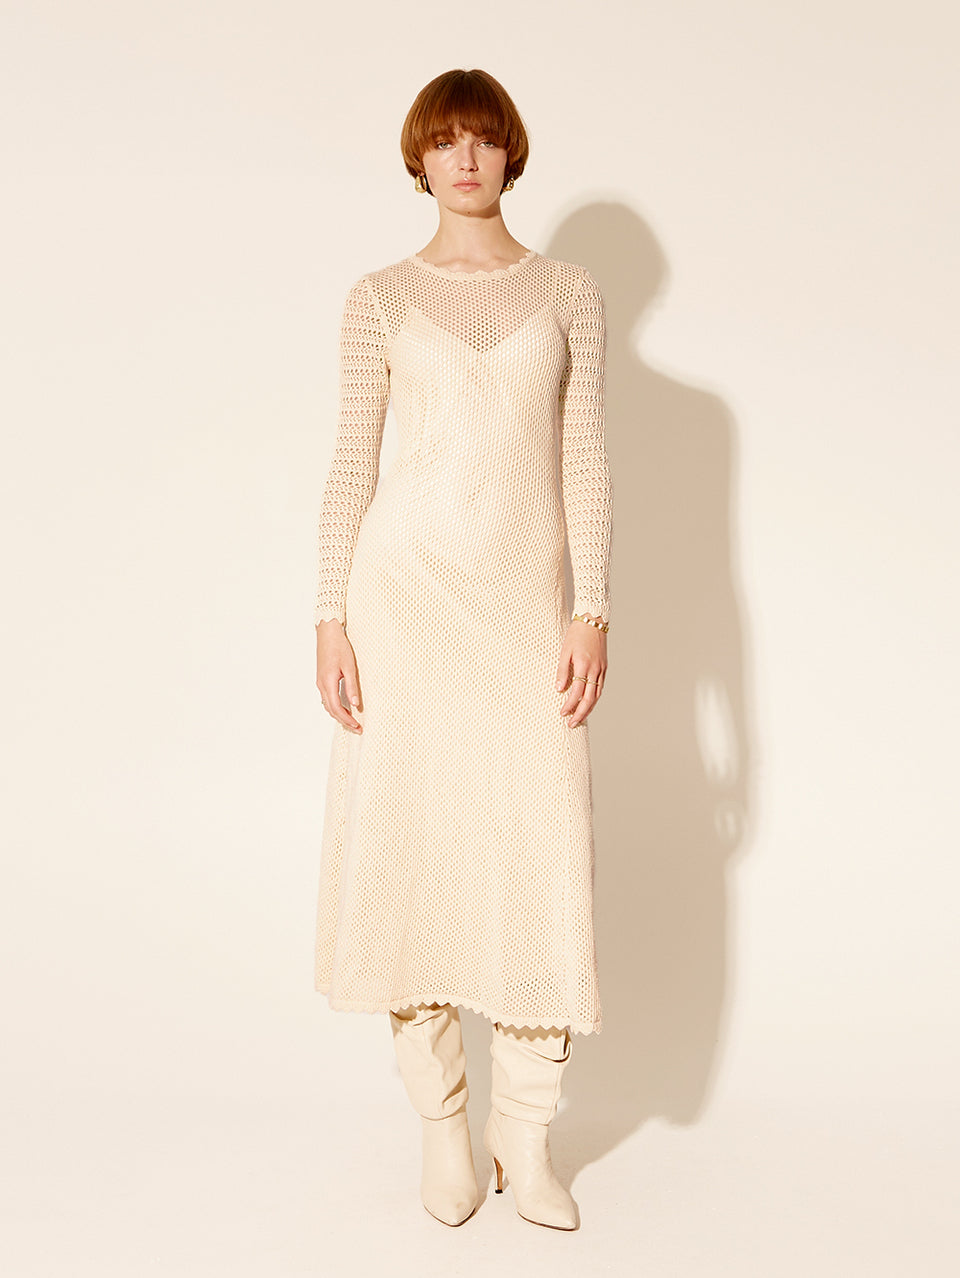 Ingrid Knit Midi Dress KIVARI | Model wears white knit dress